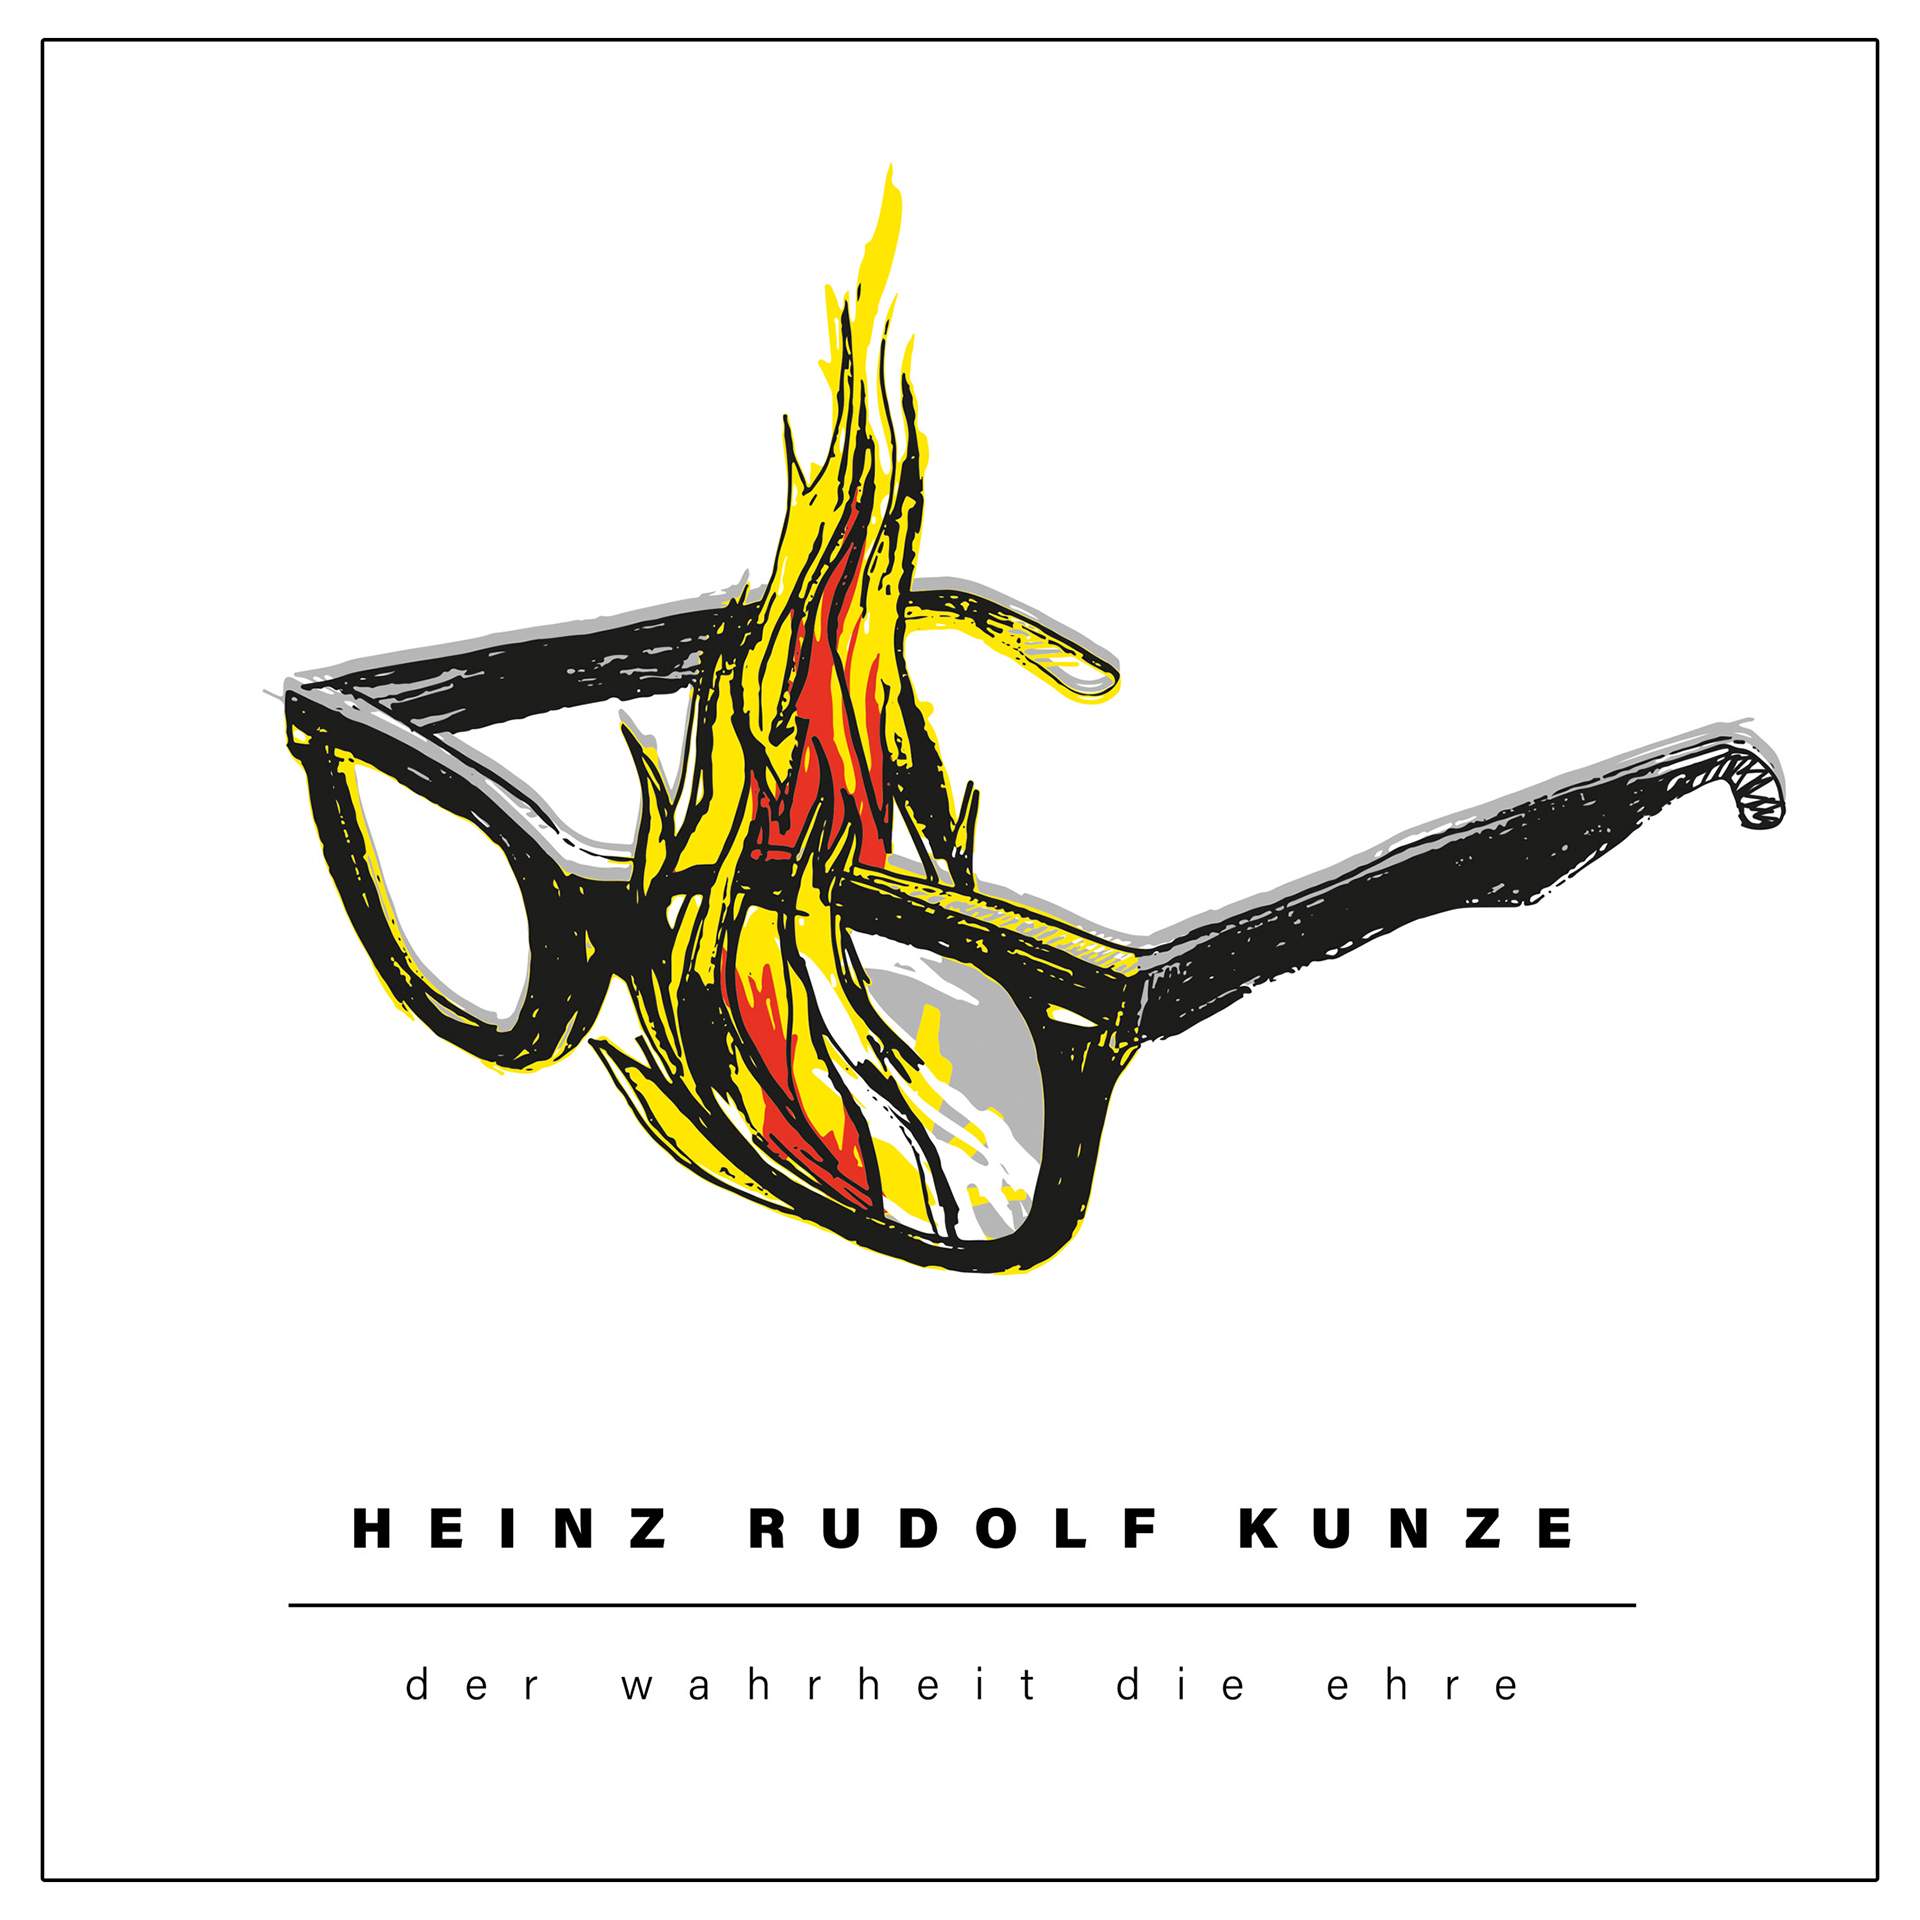 v 01 Heinz Rudolf Kunze 2020 1 Mawi